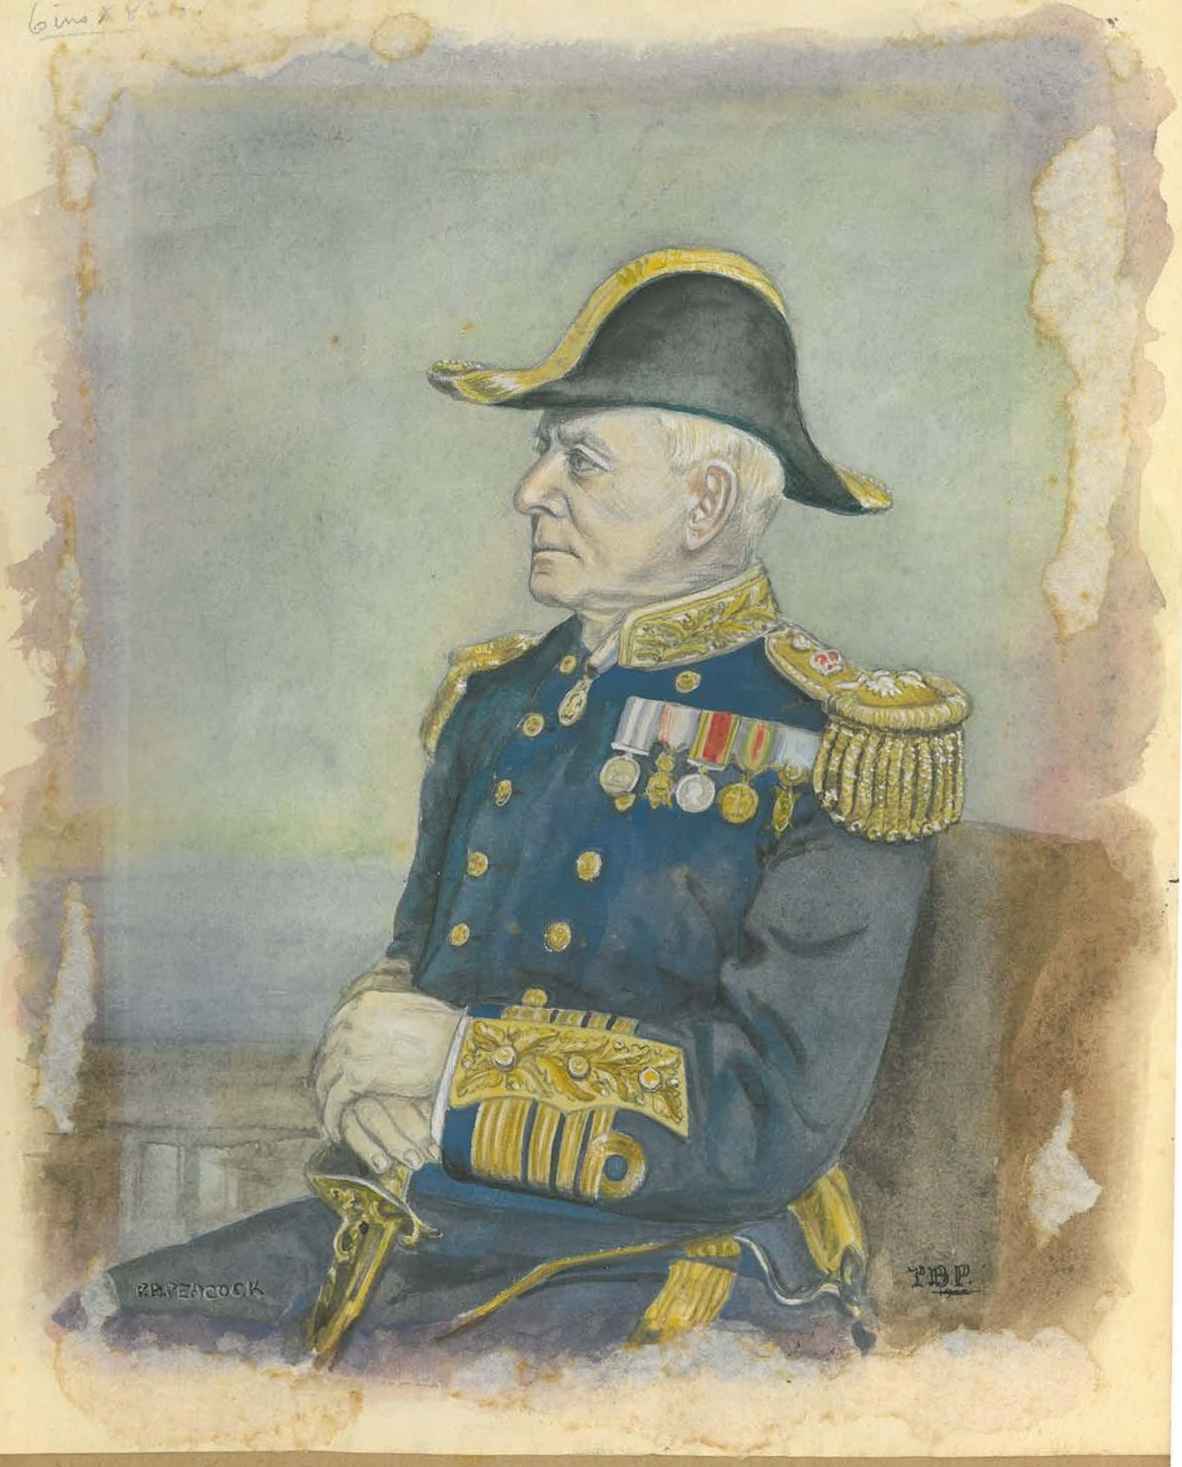 Admiral Waymouth